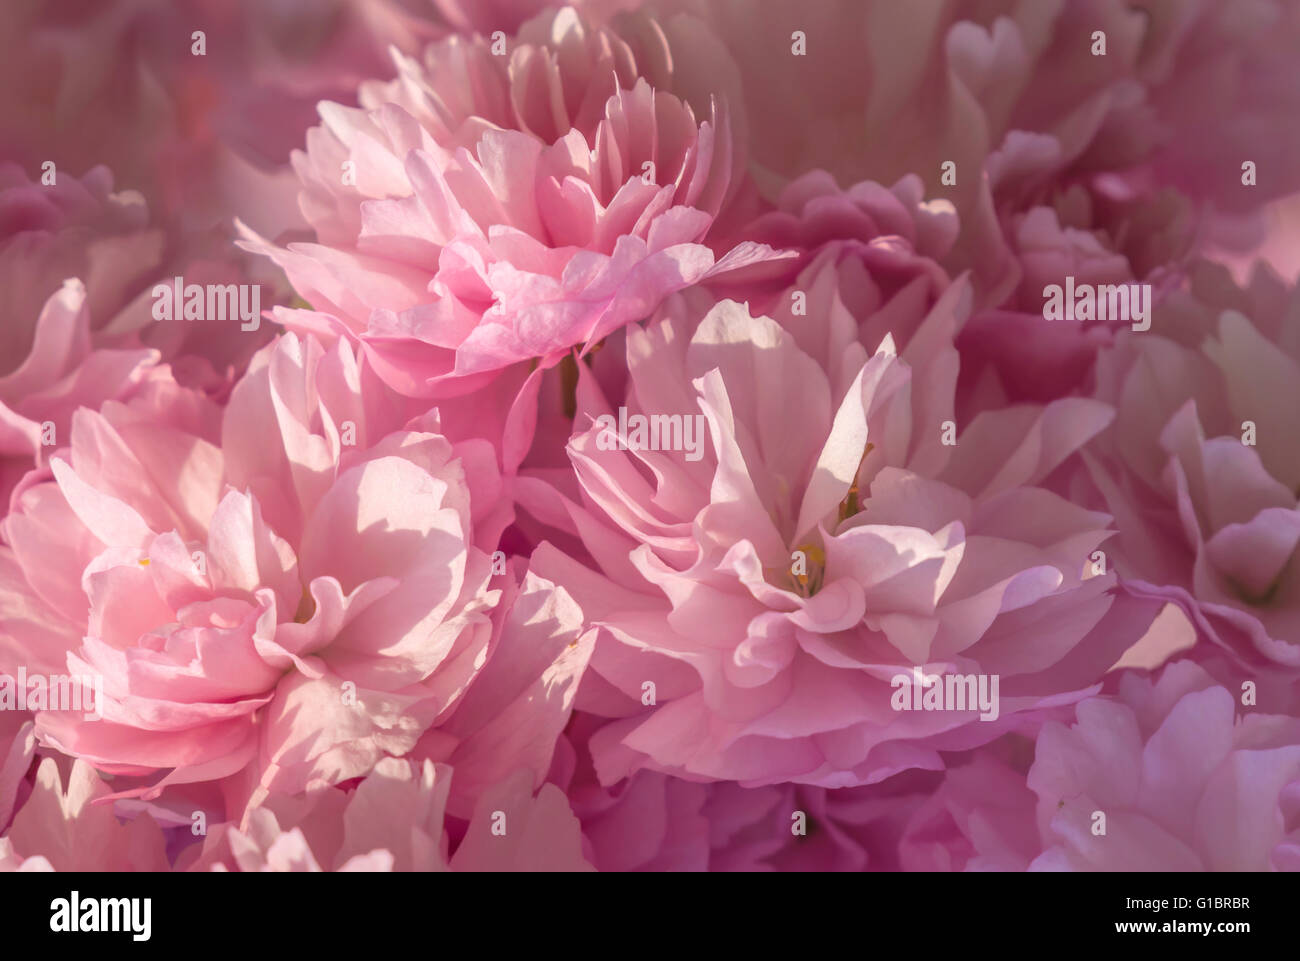 Vibrante flor rosa con suaves tonos pastel Foto de stock